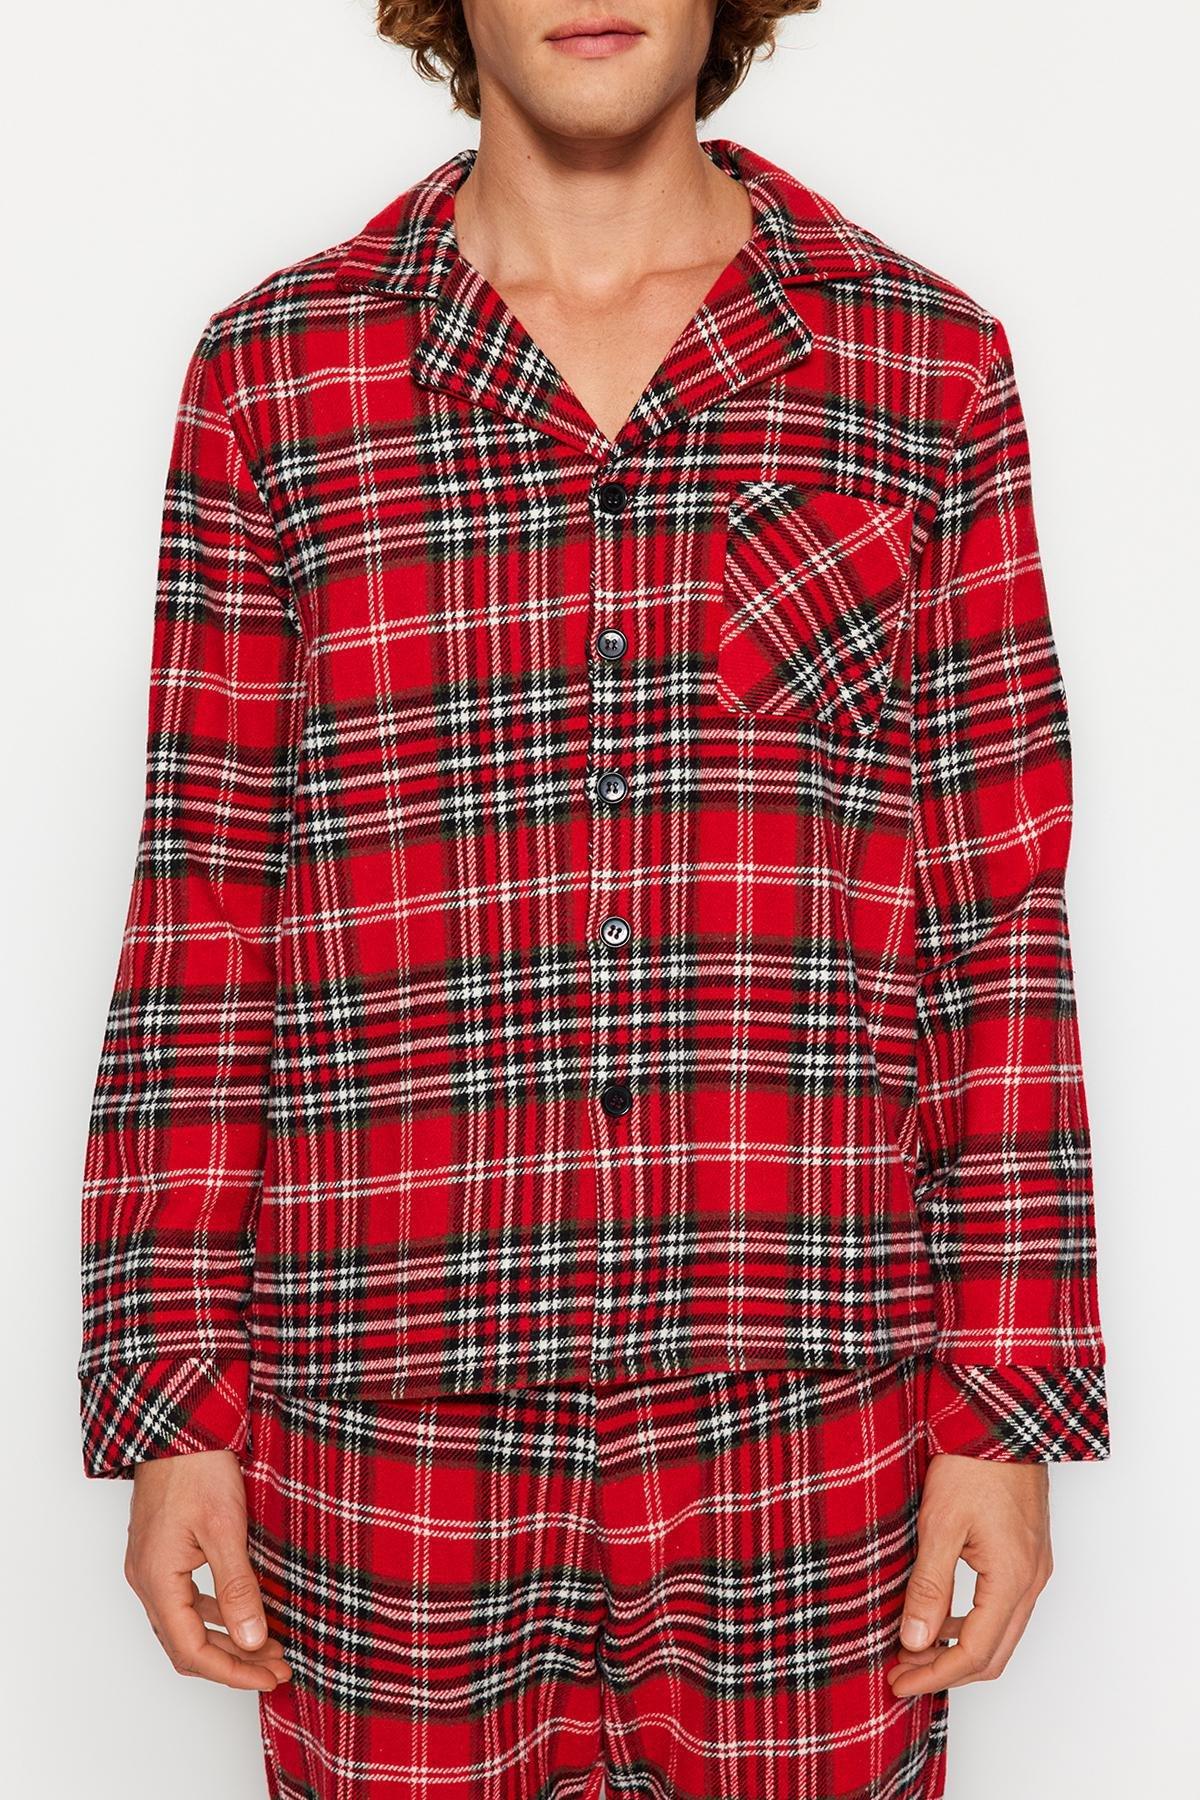 Trendyol - Red Plaid Weave Pyjamas Set